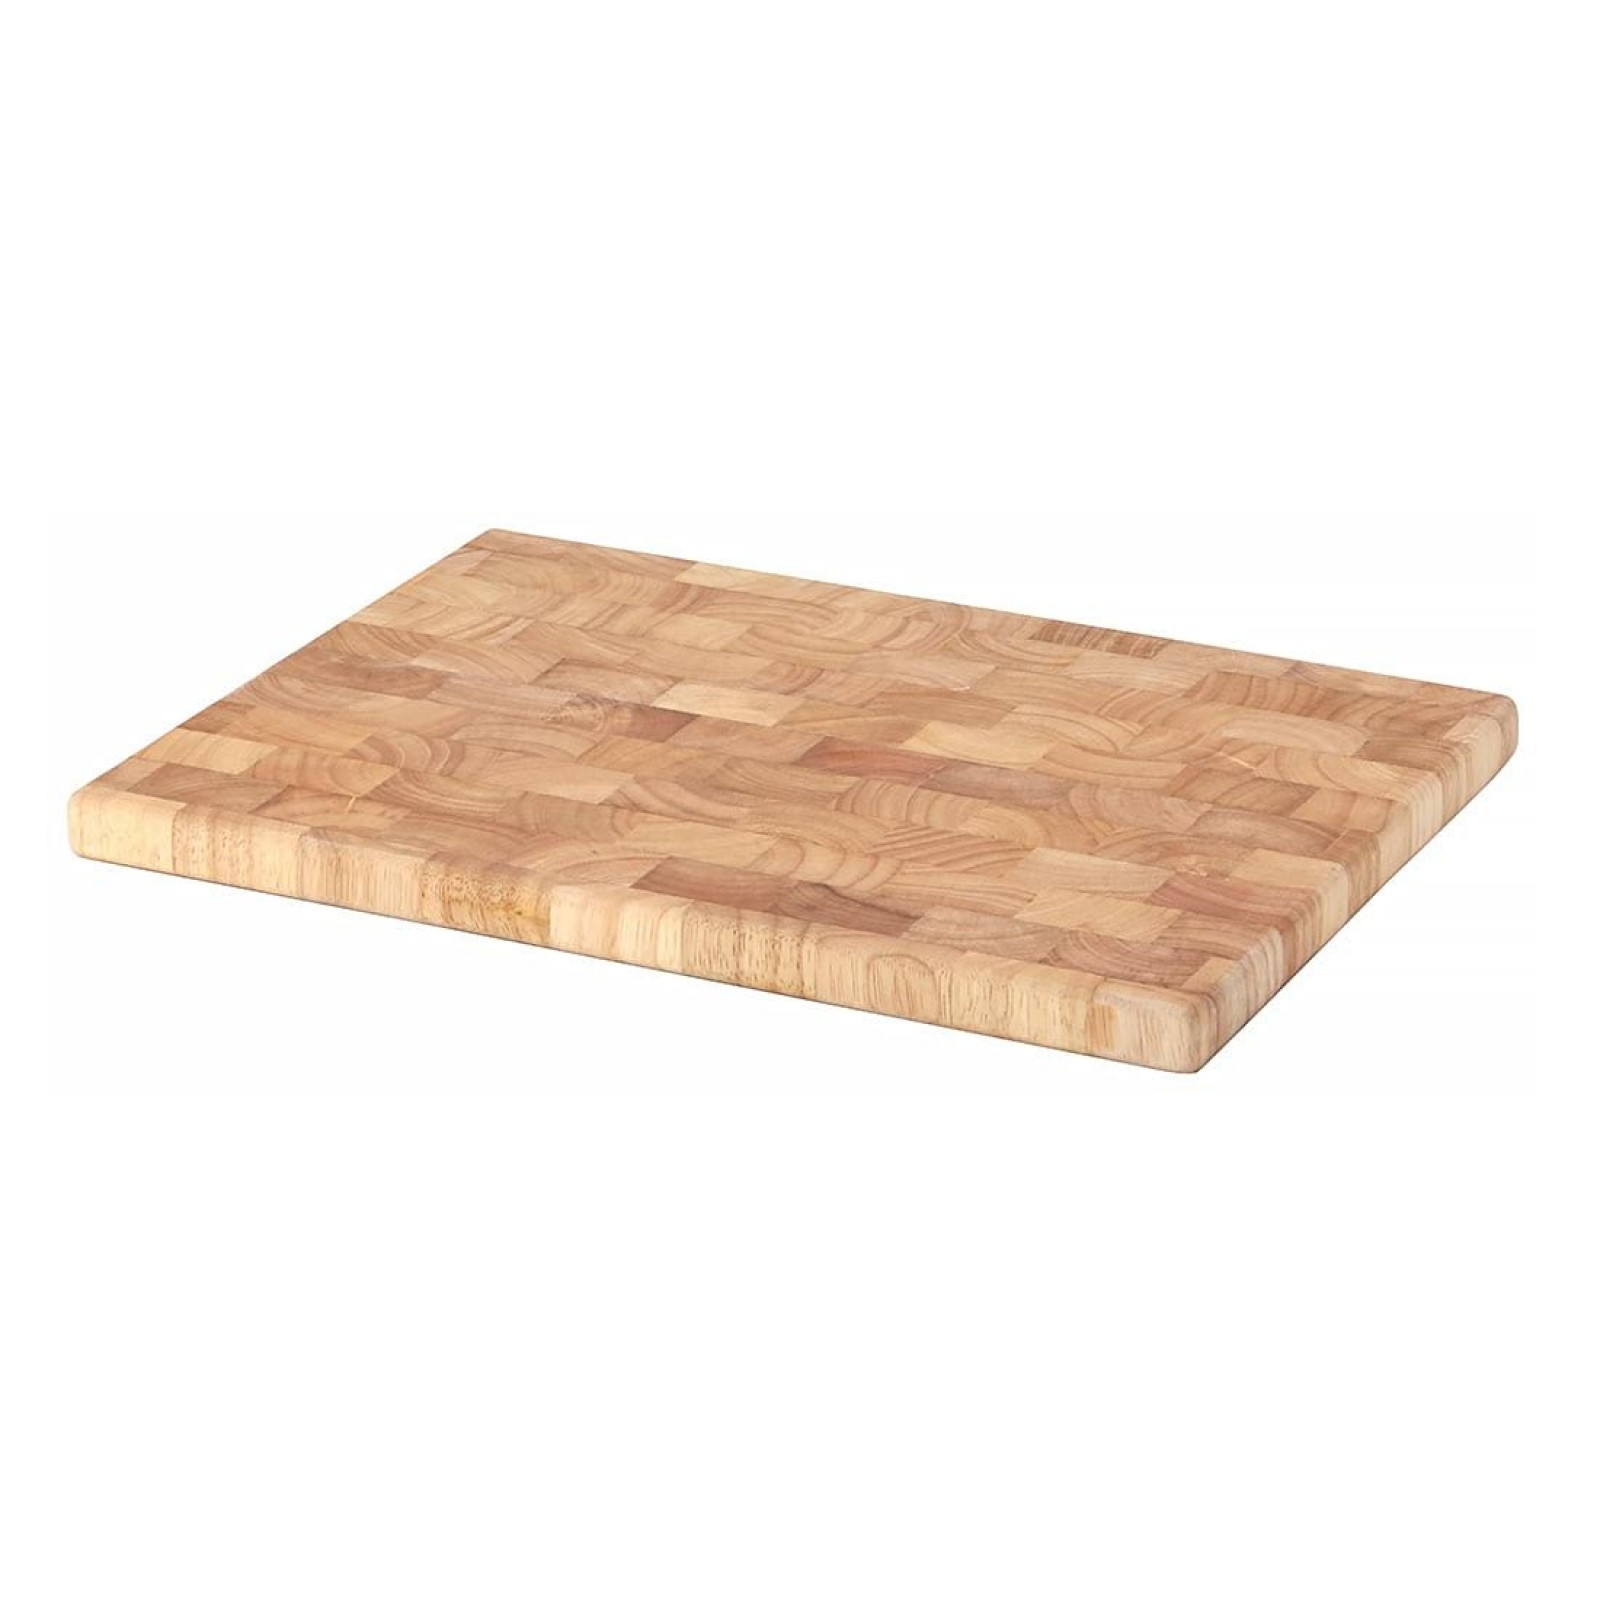 Cutting Board 35x25x2 (Rubber wood)  - Continenta